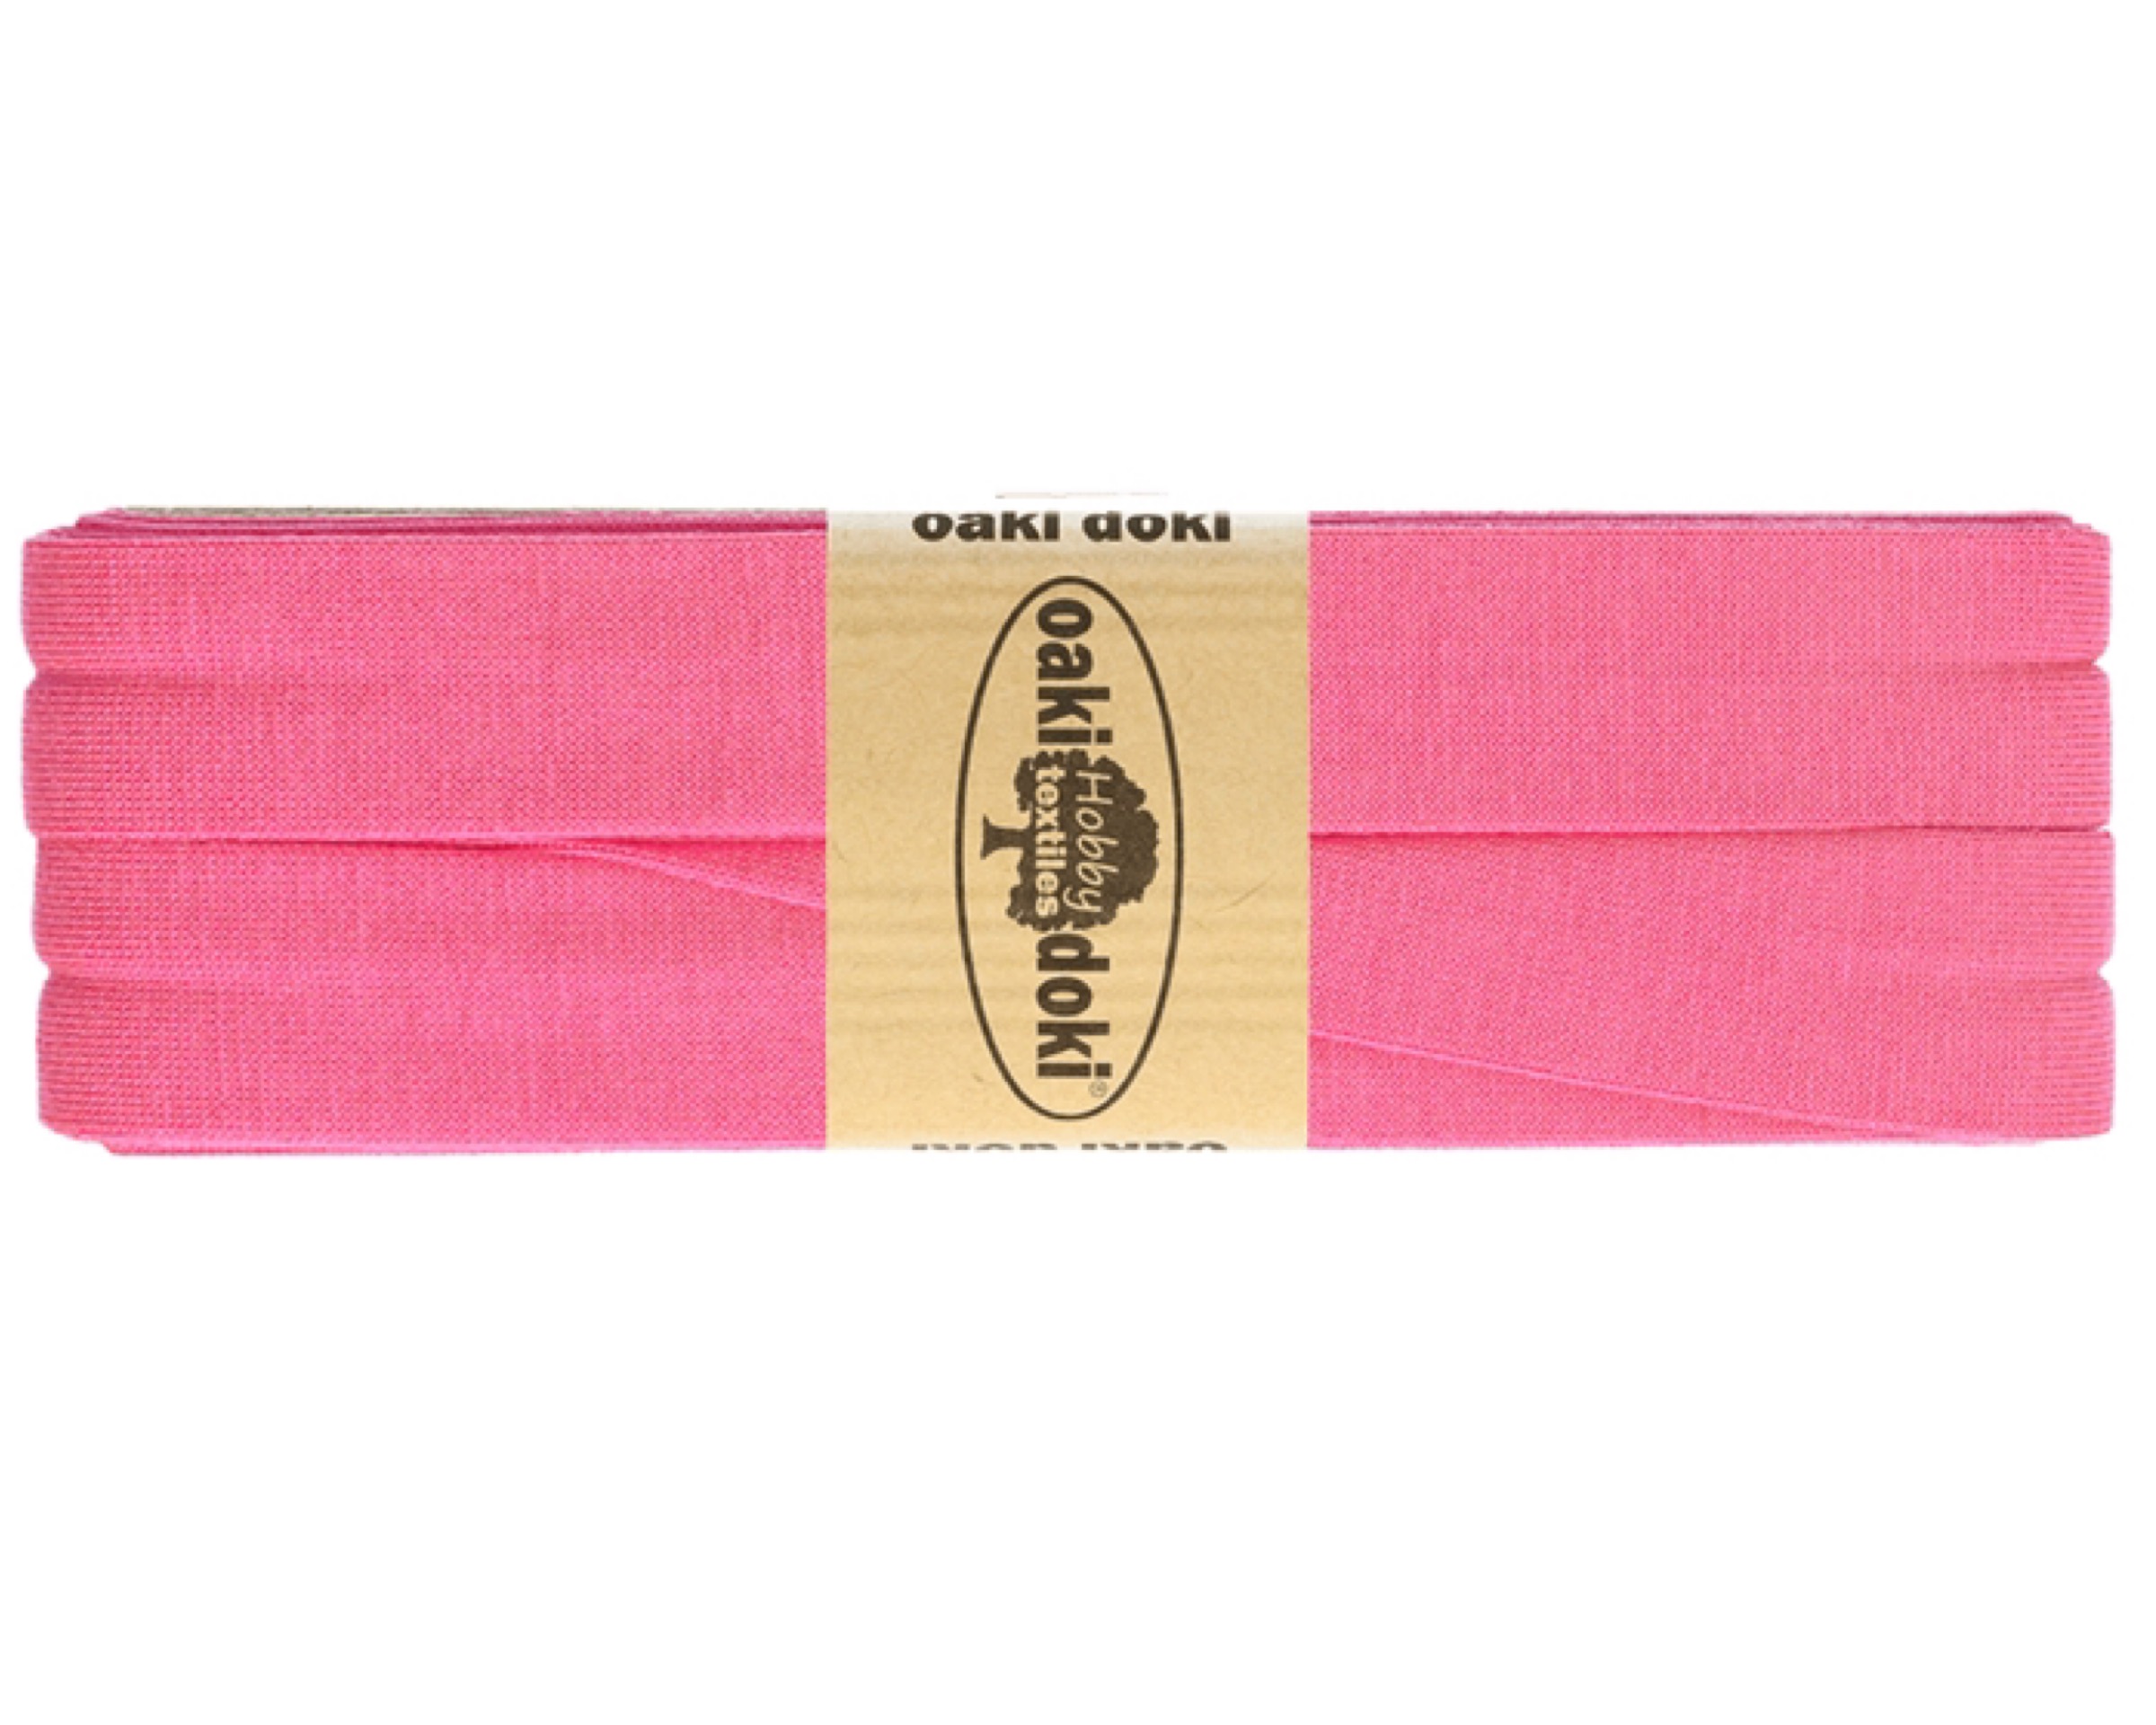 Biaisband tricot de luxe 20 mm 3m – Nr.017 fuchsia